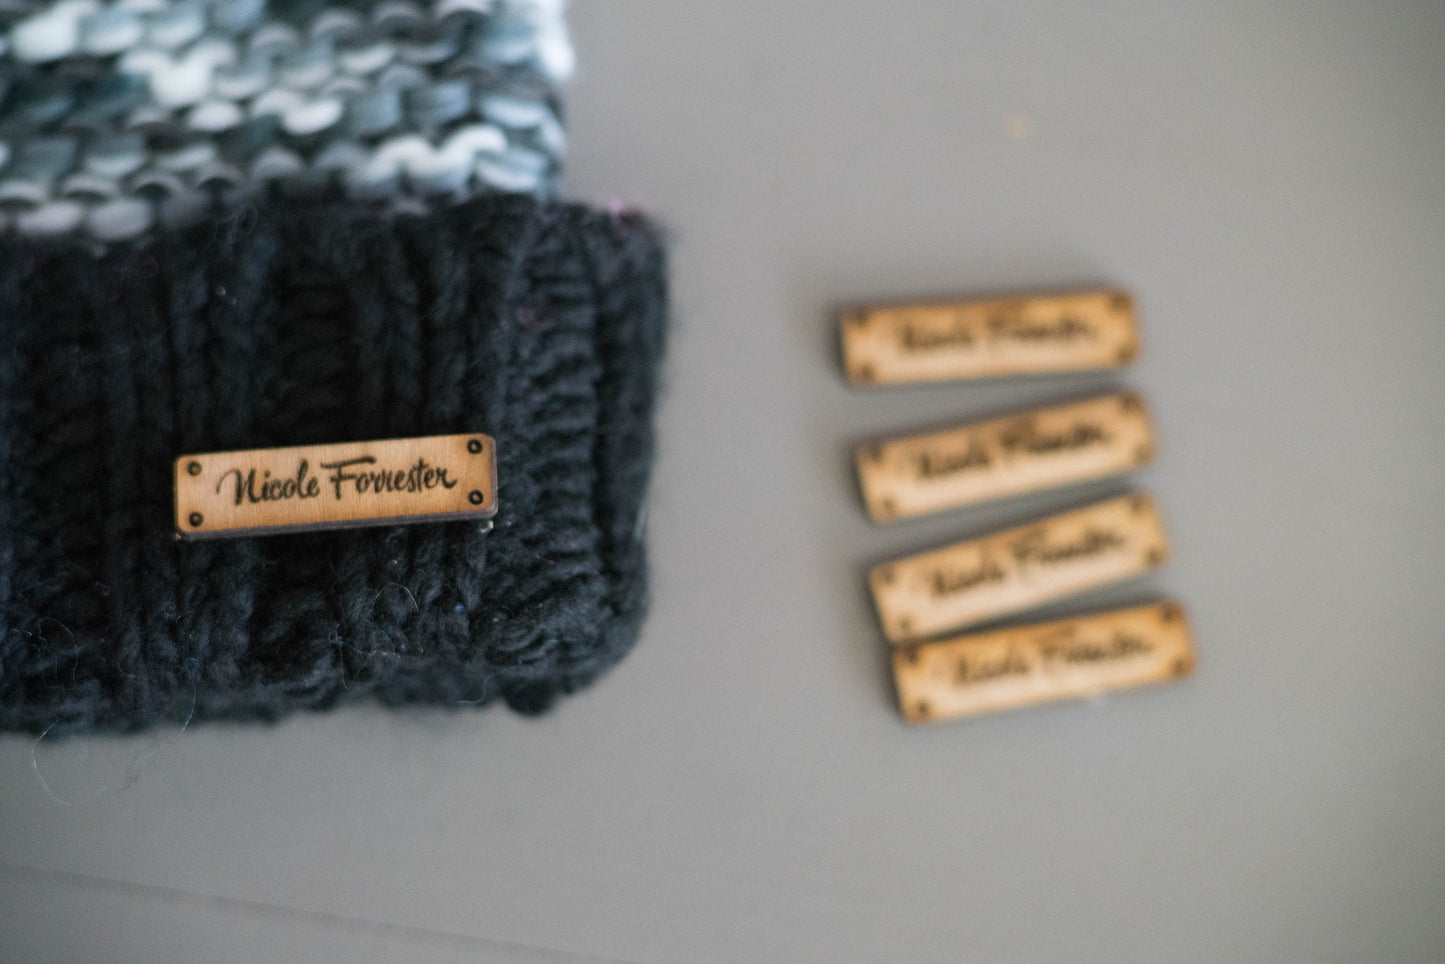 Wood Knitting Crochet Tags - Small Bars